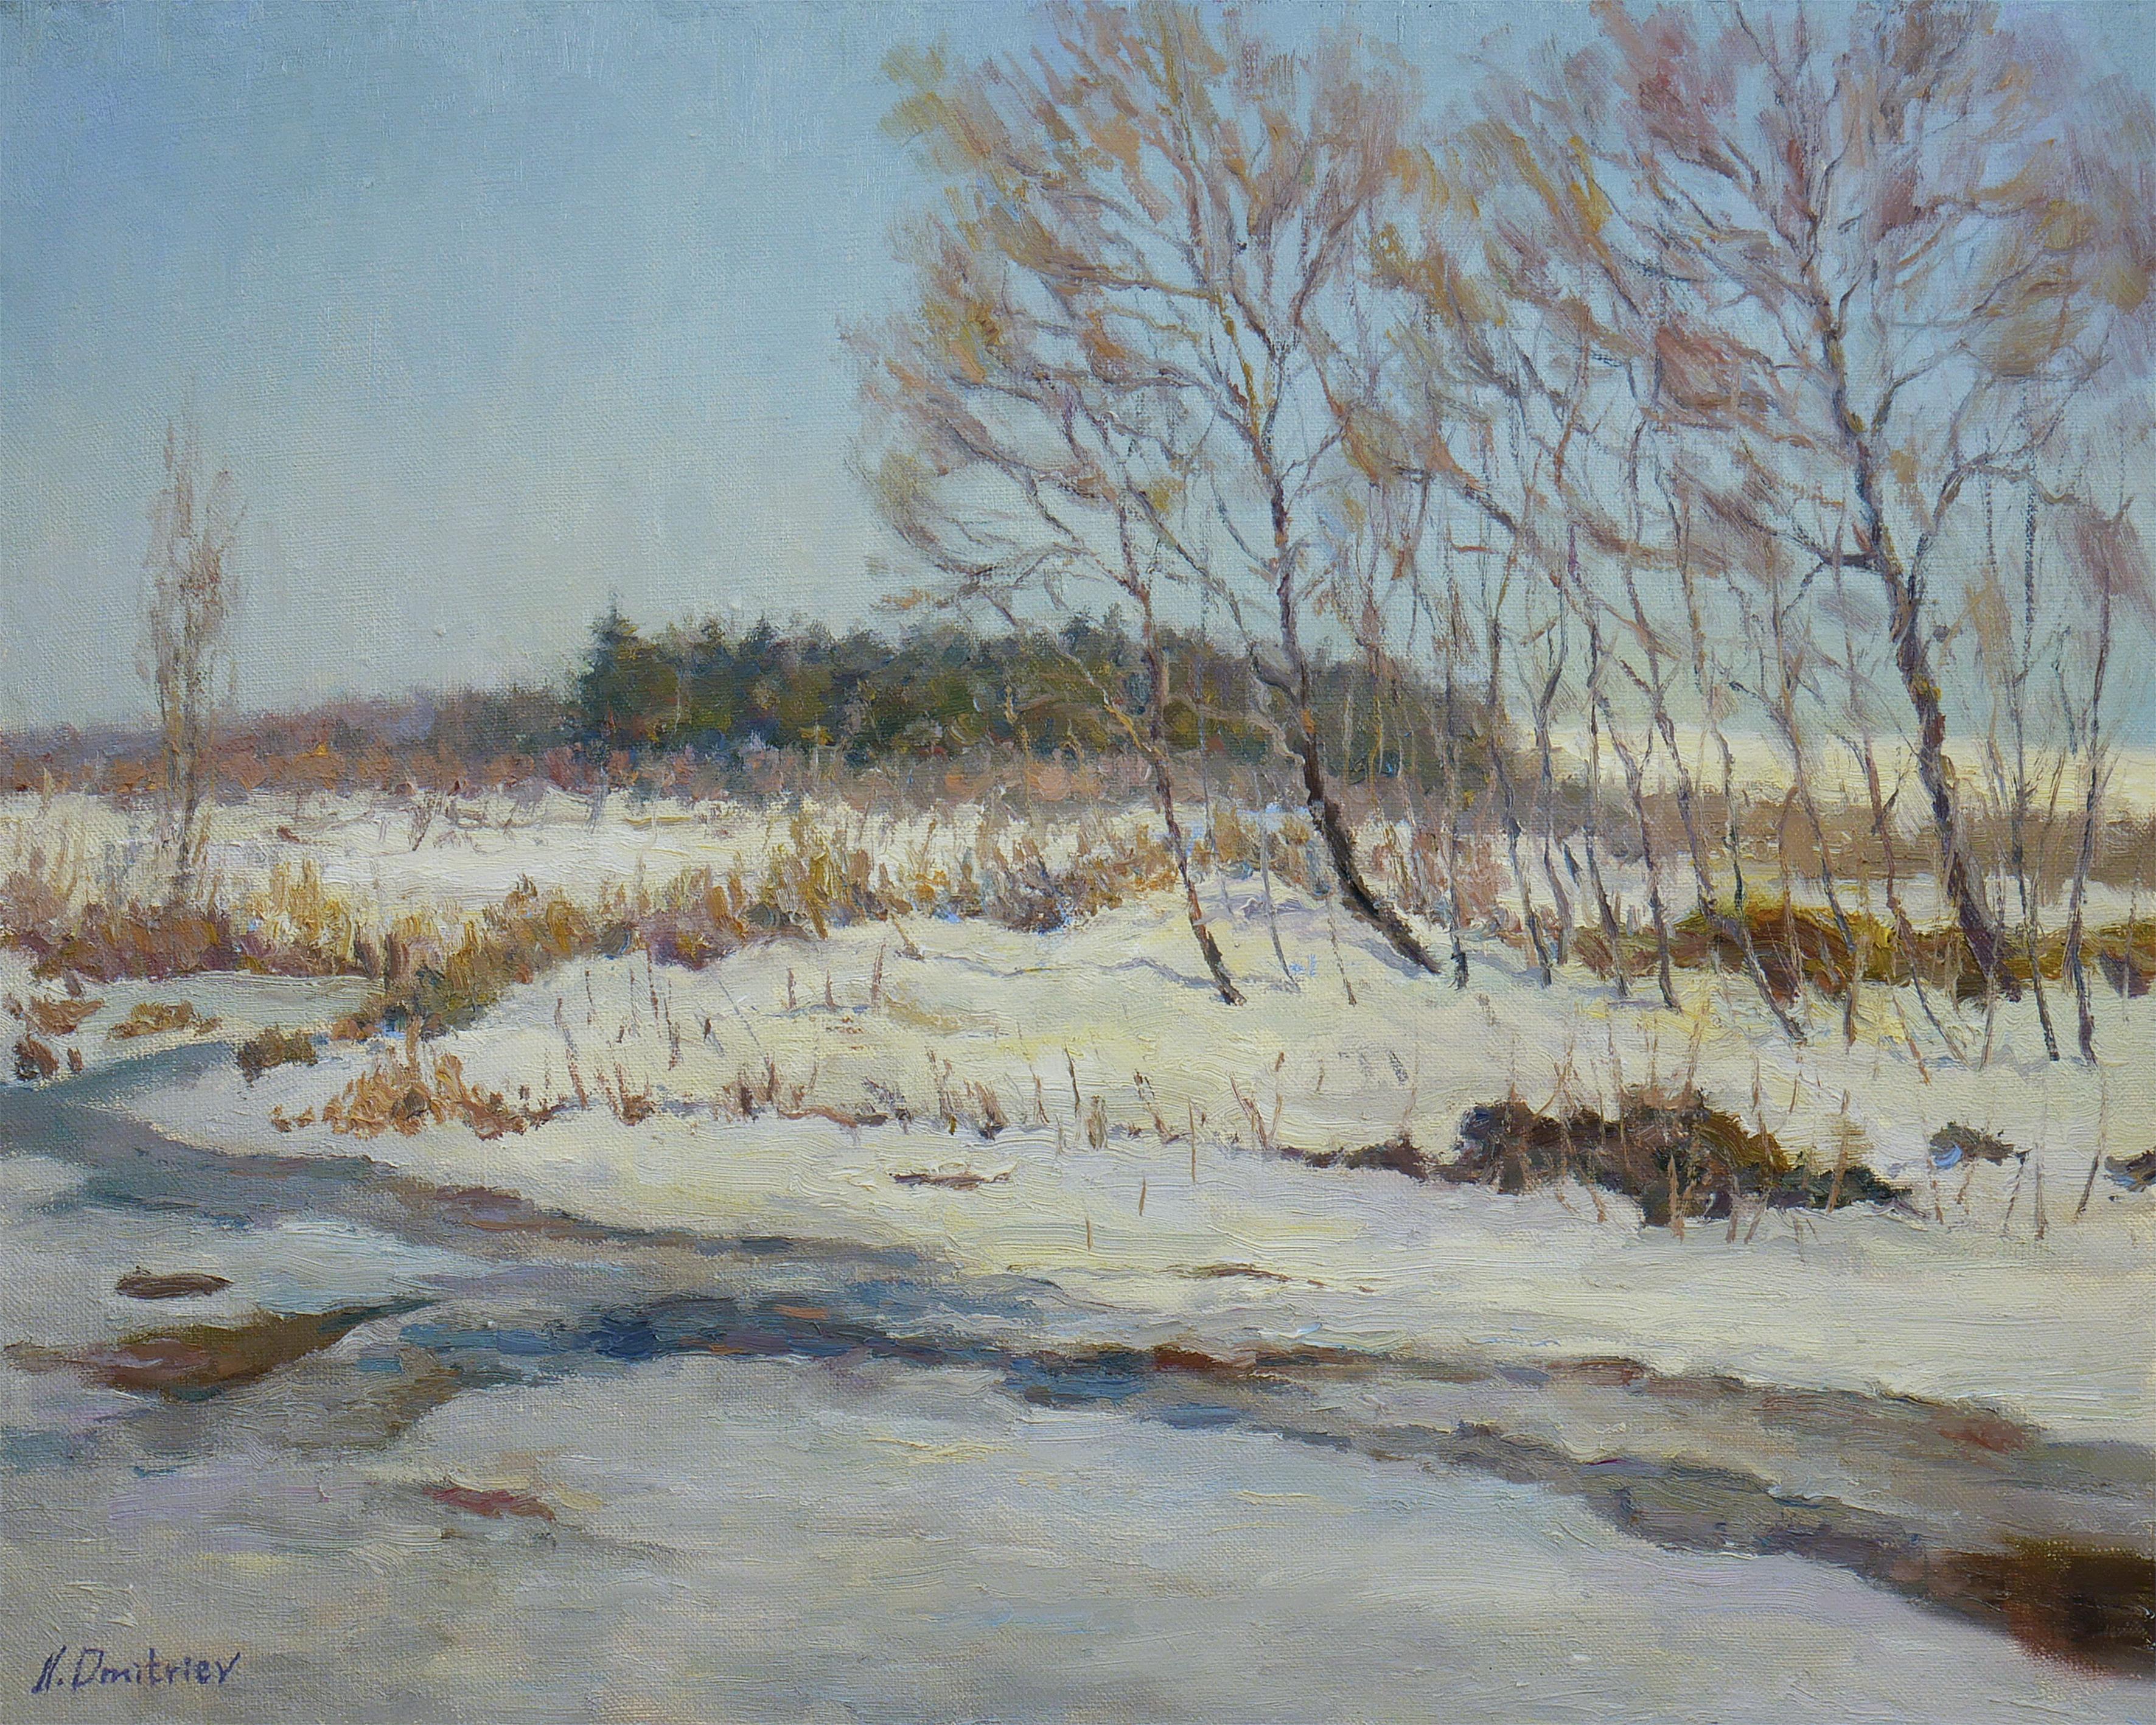 The Sunny Winter Days - original landscape painting